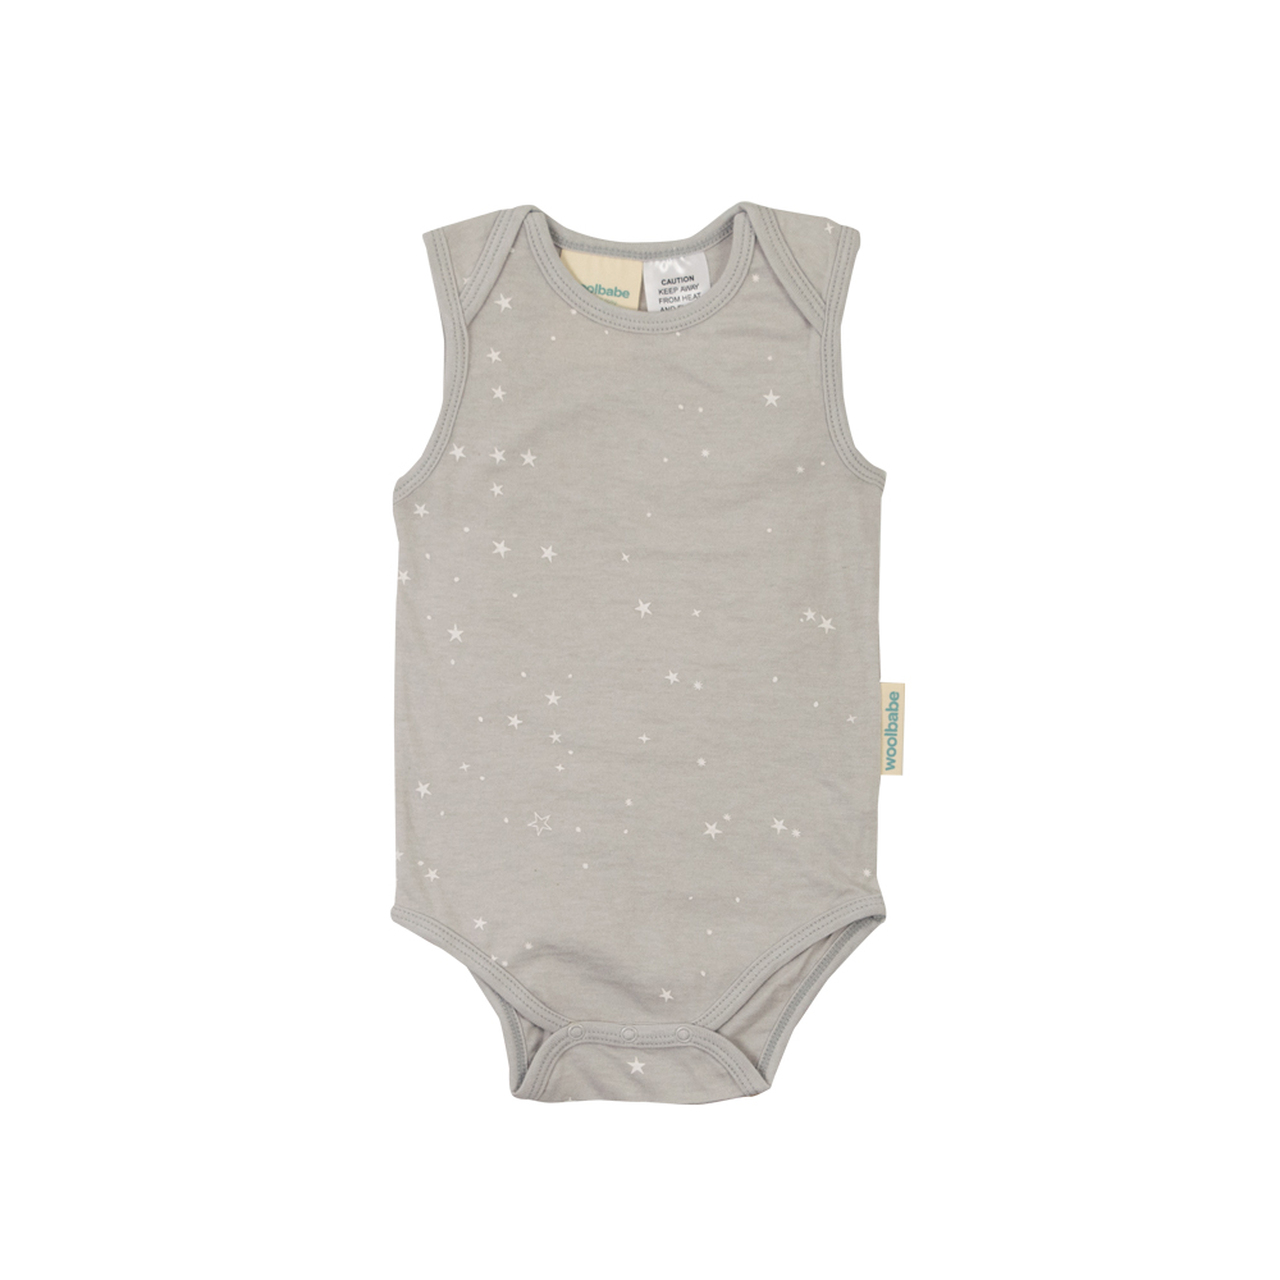 Woolbabe Merino/Organic Cotton Singletsuit - Pebble Stars - Nappies Direct